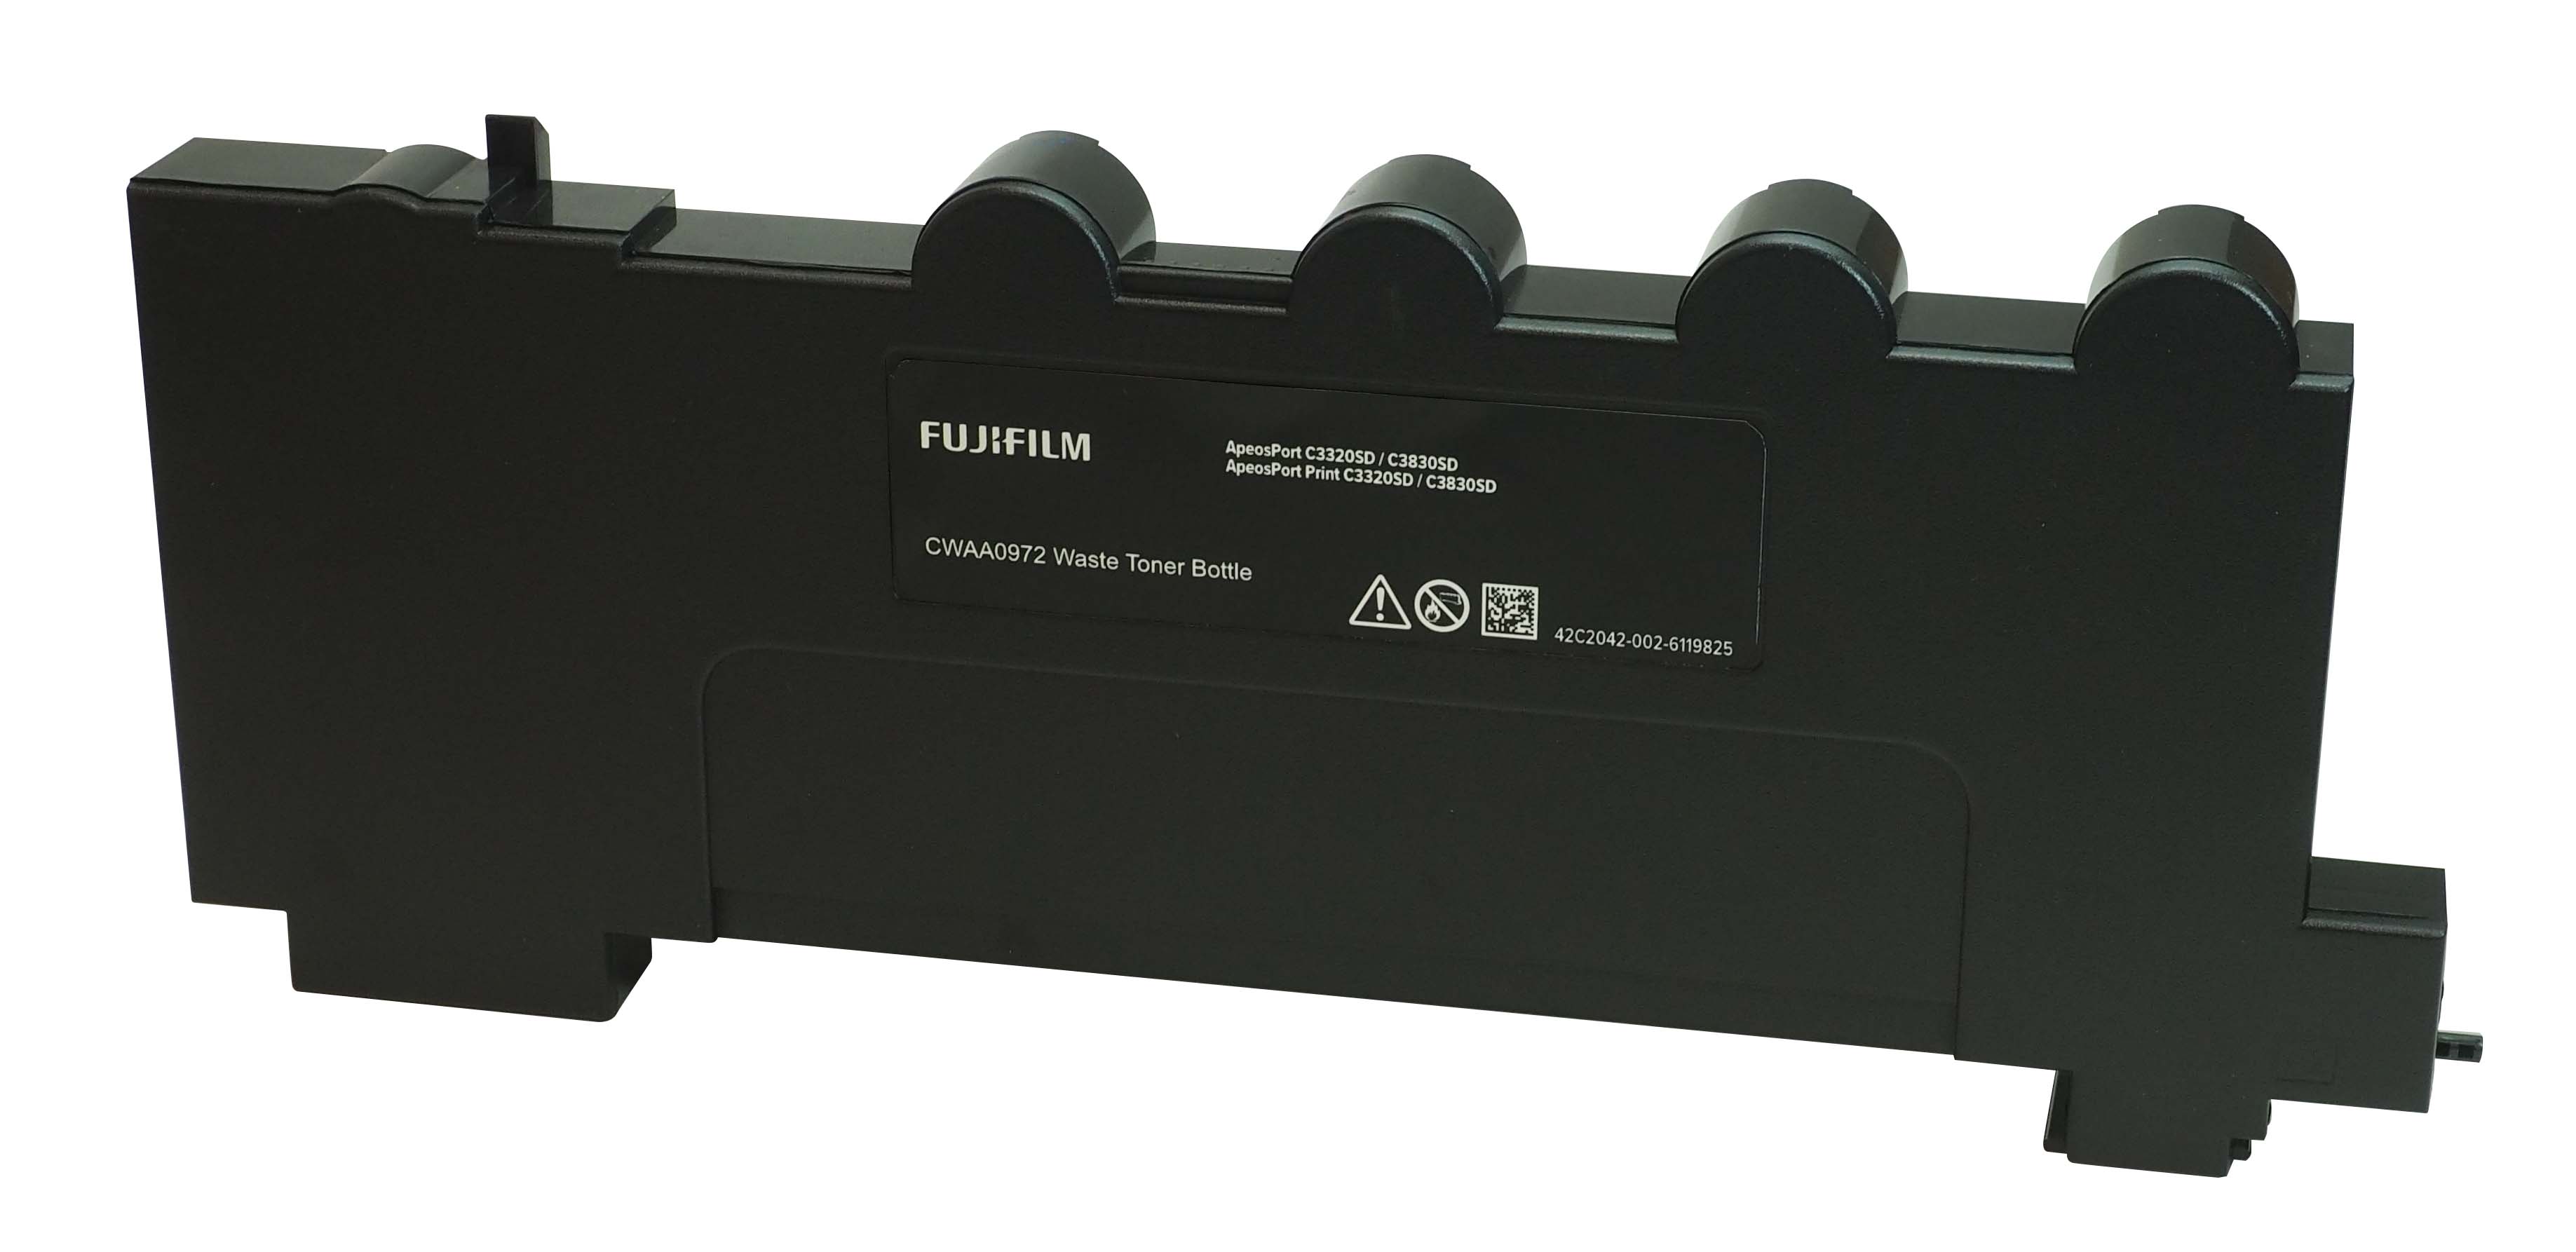 FUJIFILM ApeosPort C3830SD C3320 Waste Print Bottle CWAA0972 - General Business Machines